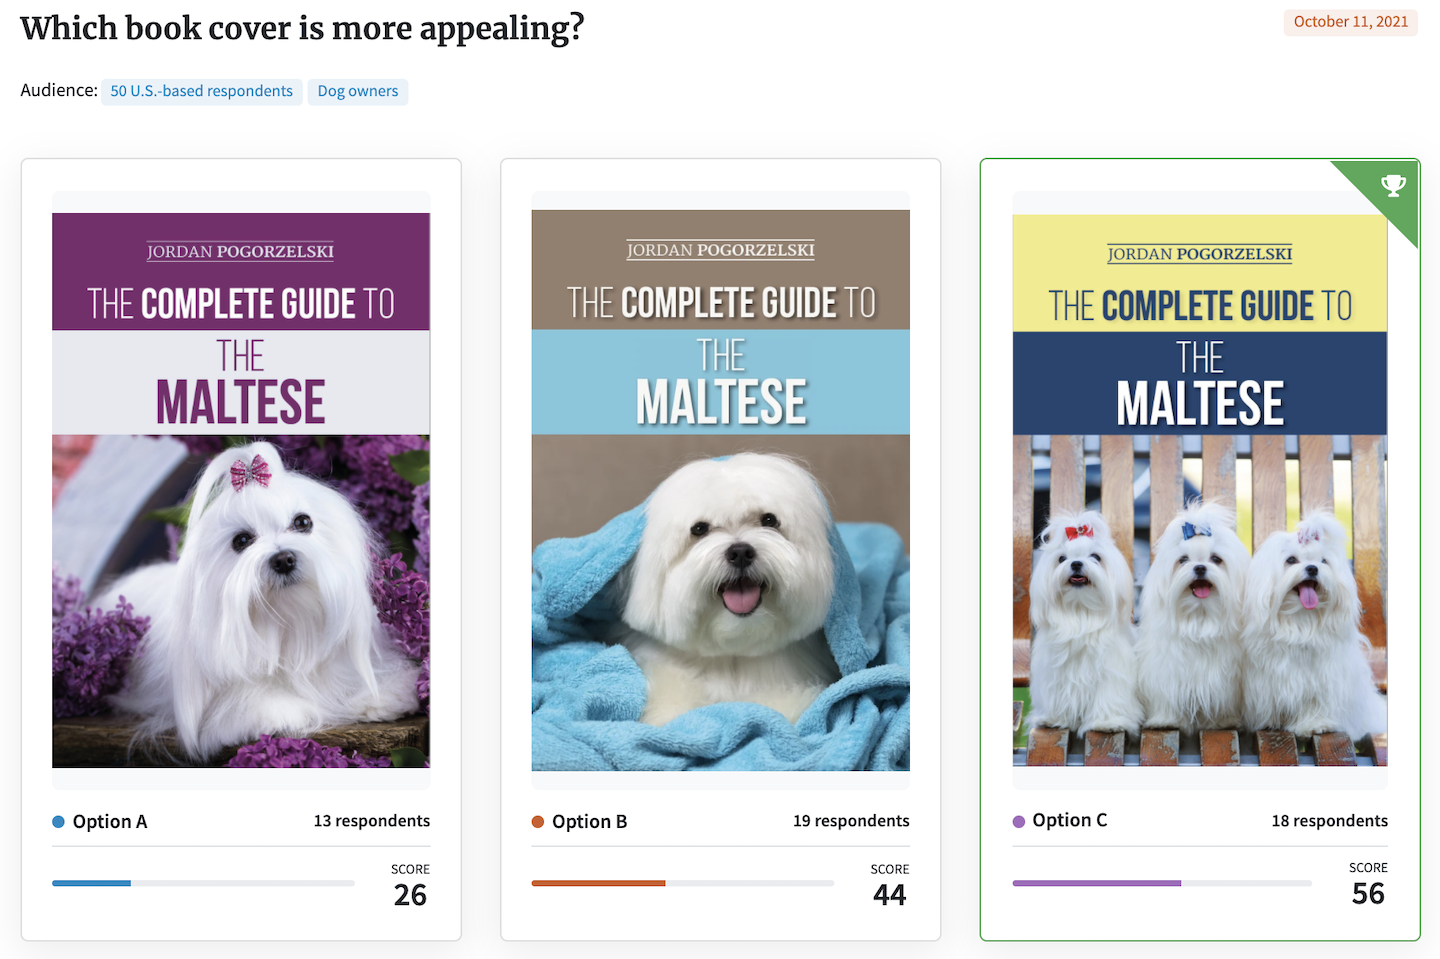 Testing book covers: PickFu poll testing a dog book cover